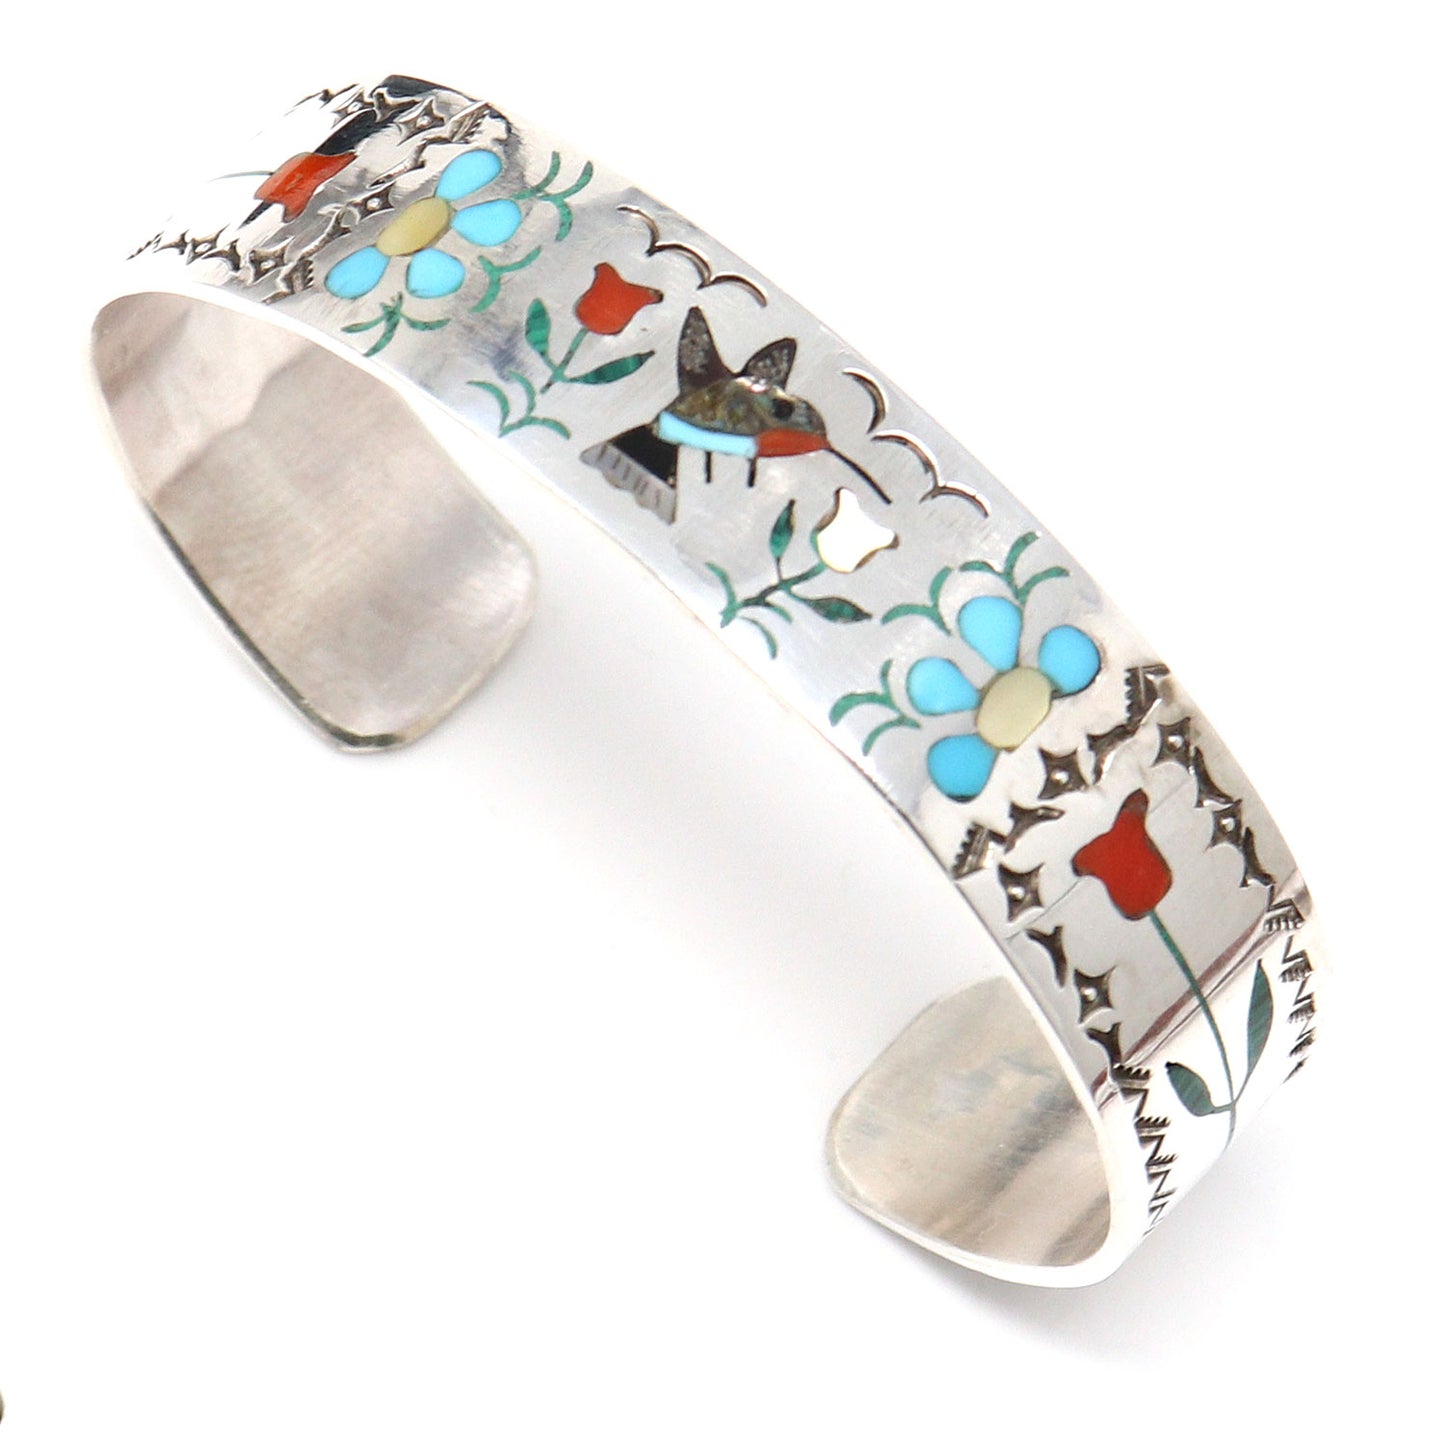 Intricately Inlaid Zuni Humming Bird  Bracelet By Guardian